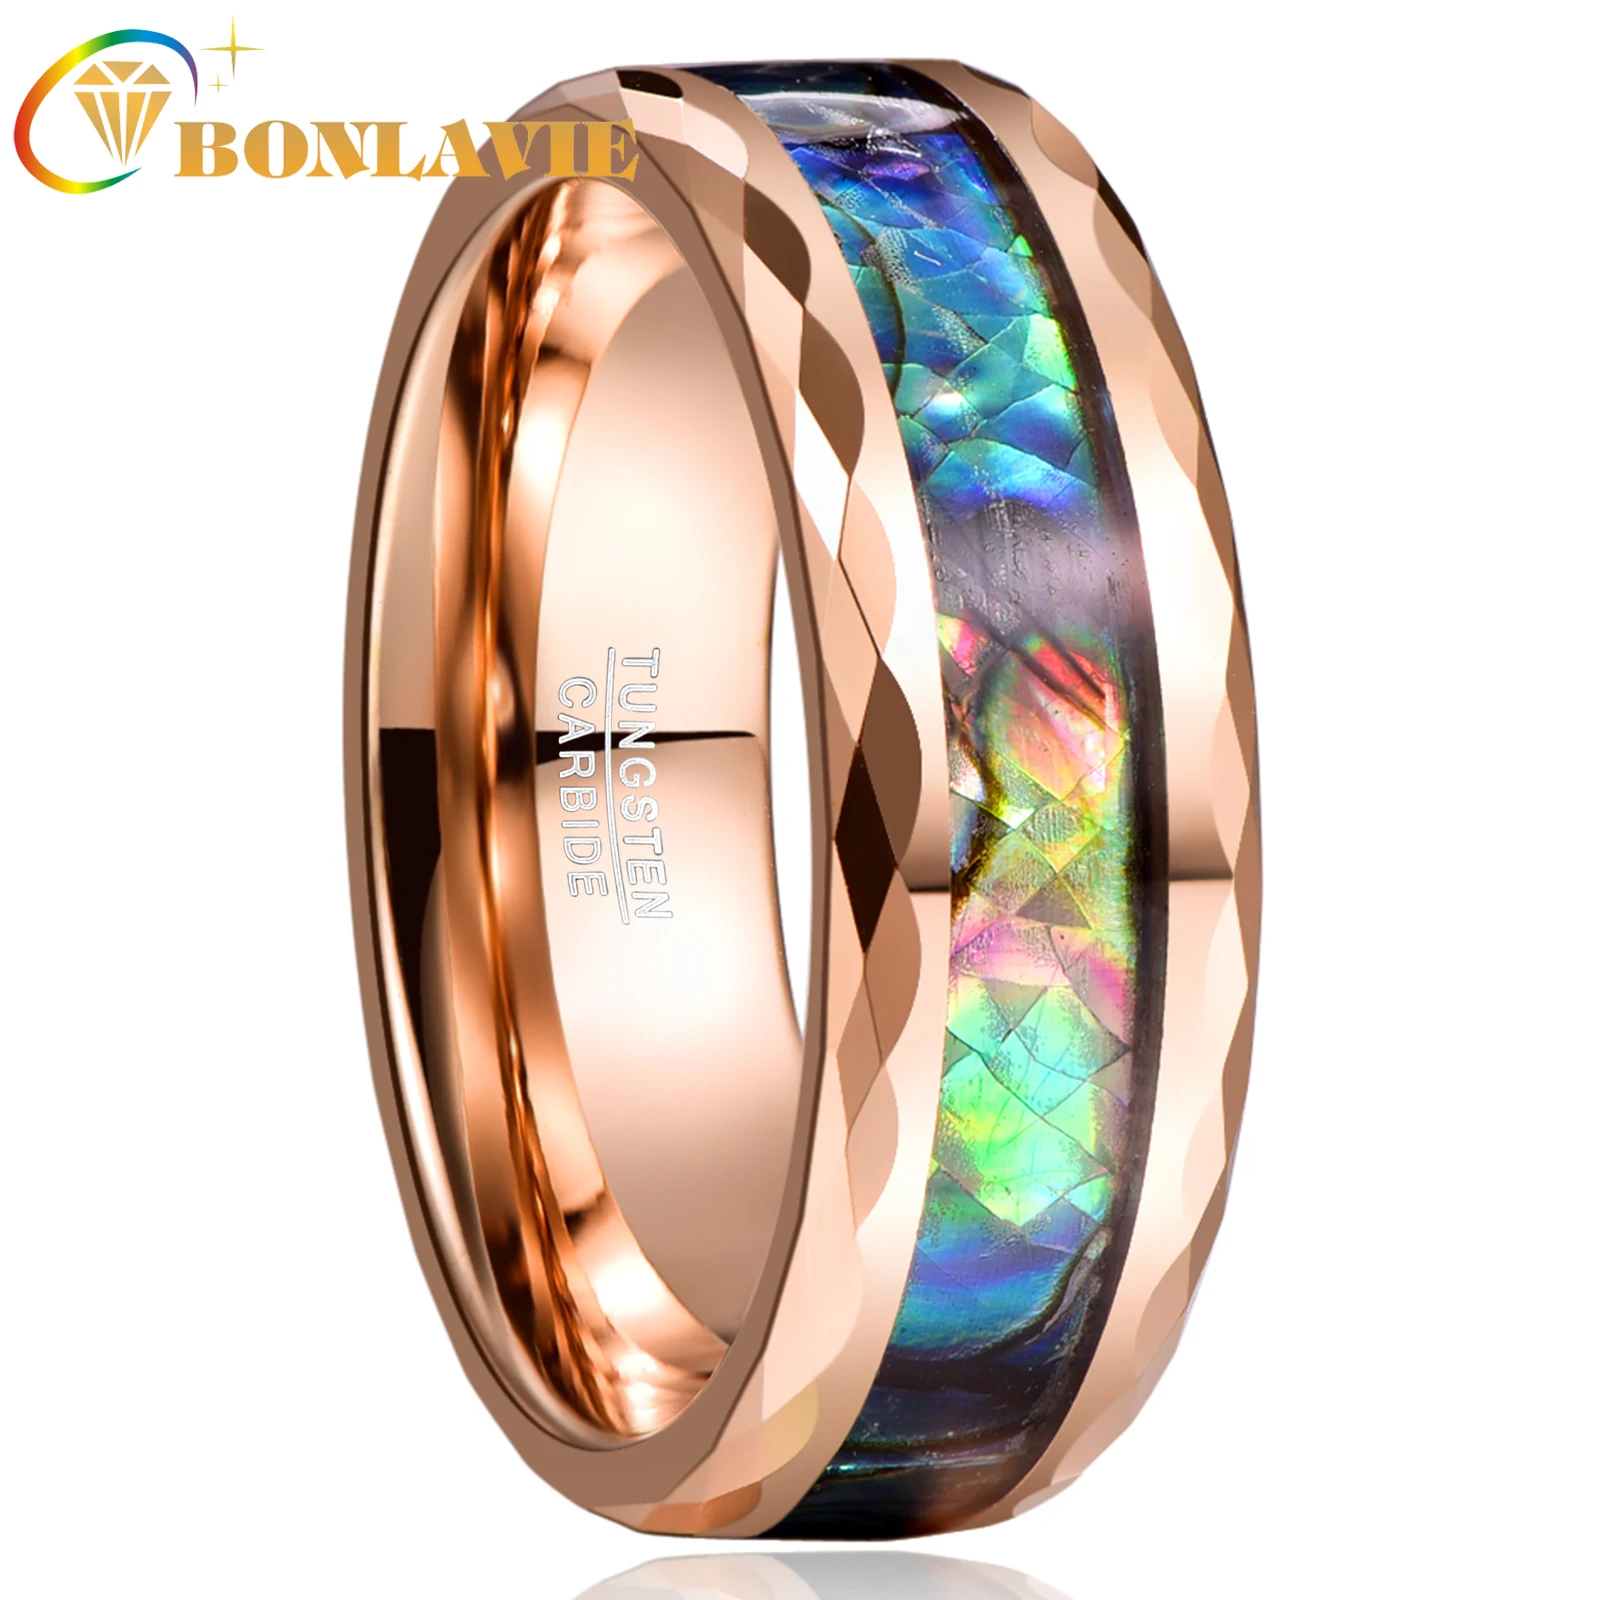 

BONLAVIE 8mm Tungsten Carbide Ring Plating Rose Gold Batch Flower Inlaid Abalone Shell Opal Men's Ring Jewelry